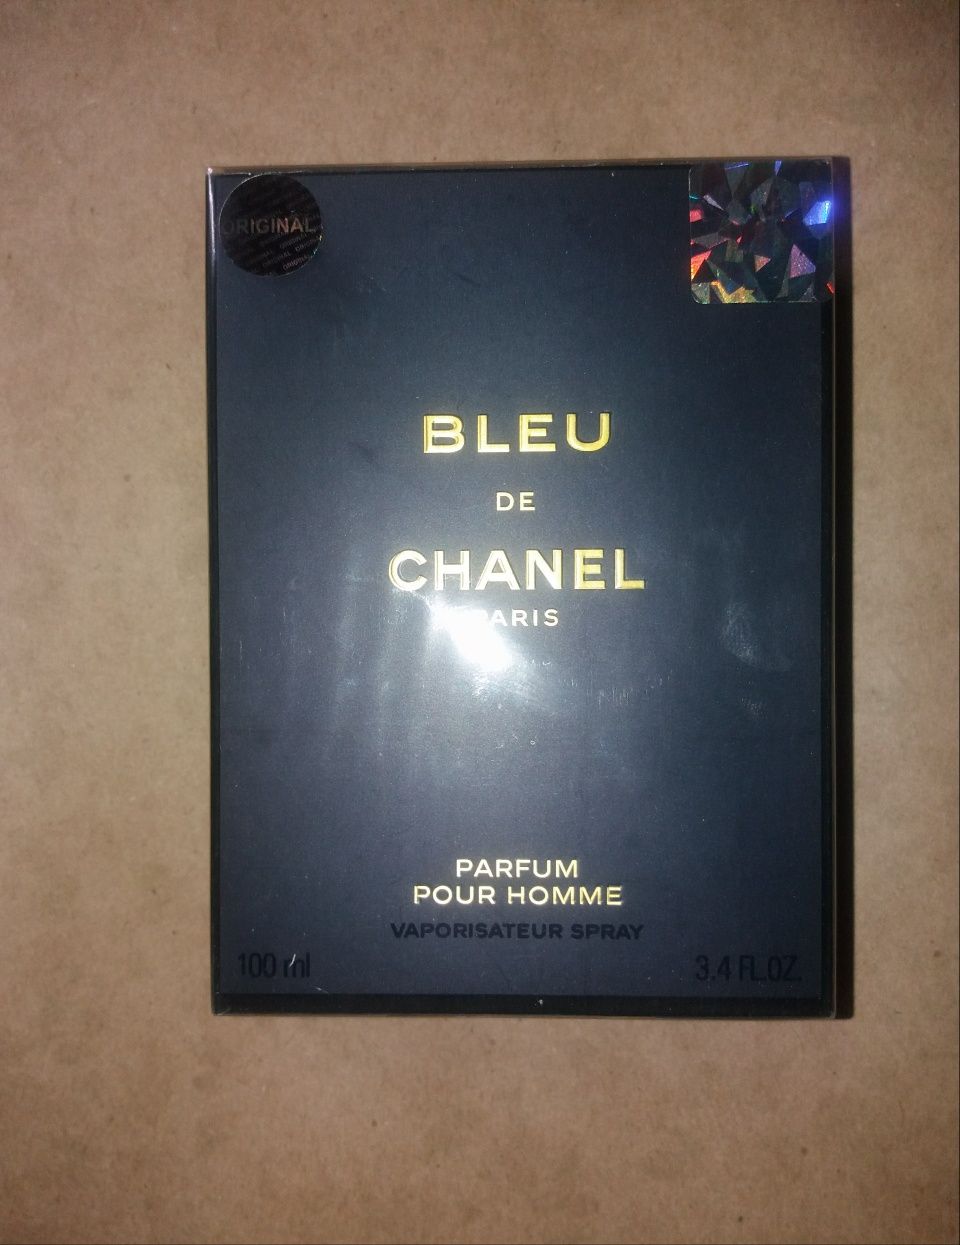 Chanel Bleu de Chanel Шанель Блу парфюм 100мл духи парфюмирована вода